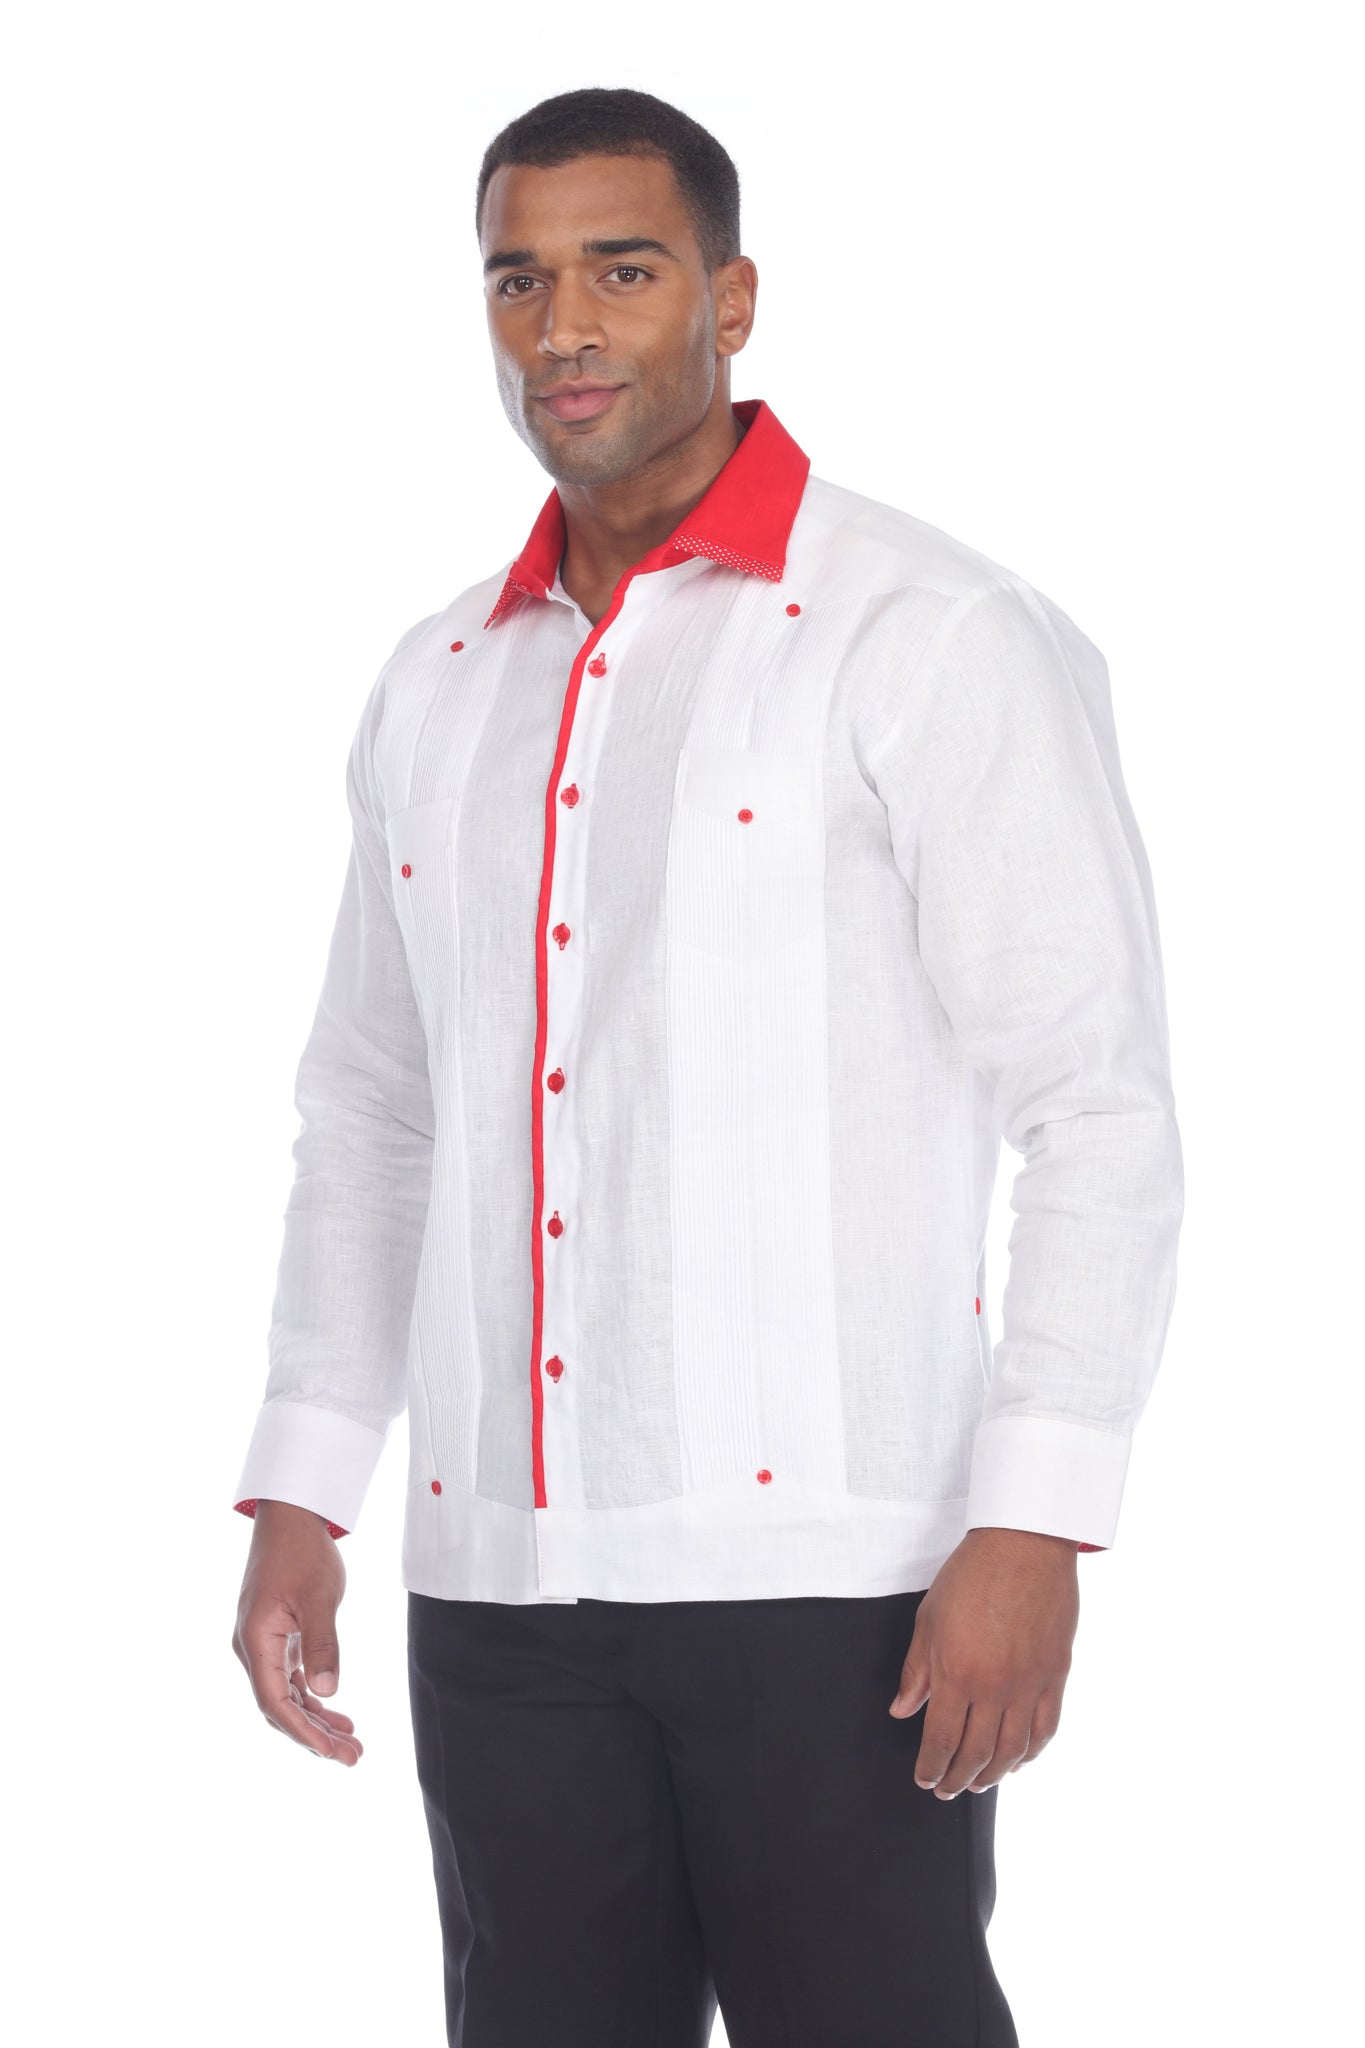 Mojito Men's Guayabera Shirt Long Sleeve 100% Linen with Stylish Print Trim Accent - Mojito Collection - Guayabera, Long Sleeve Shirt, Mens Shirt, Mojito Guayabera Shirt